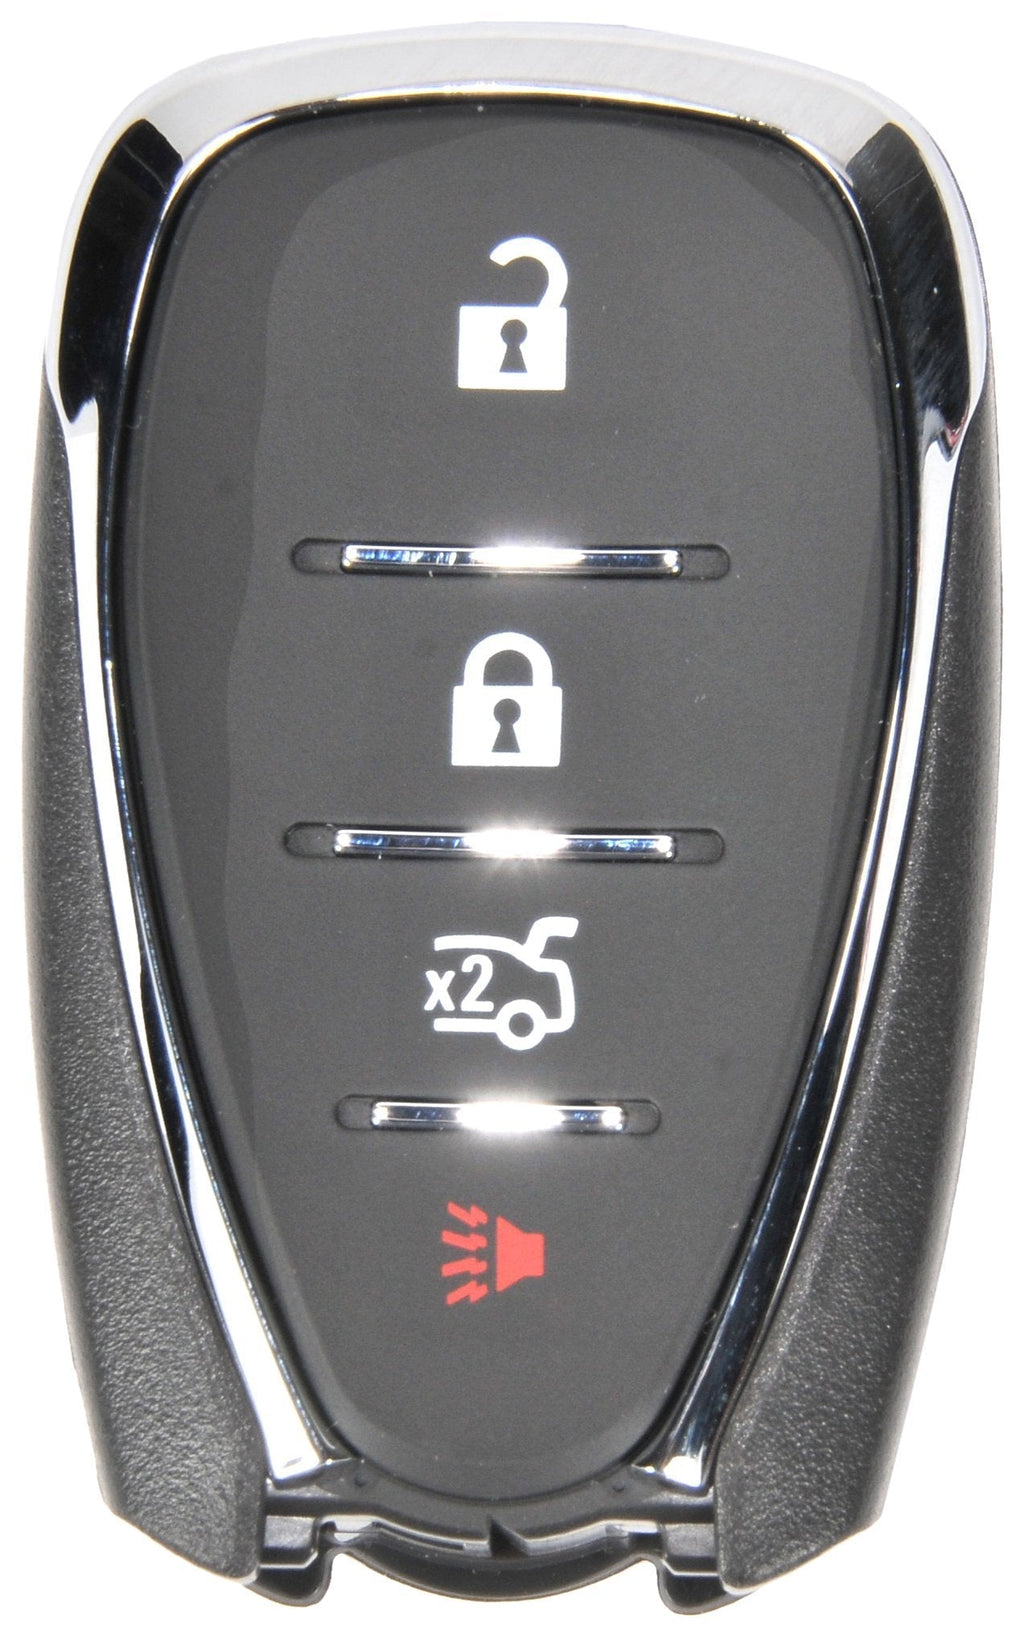  [AUSTRALIA] - ACDelco 13508771 GM Original Equipment Keyless Entry Remote Key Fob